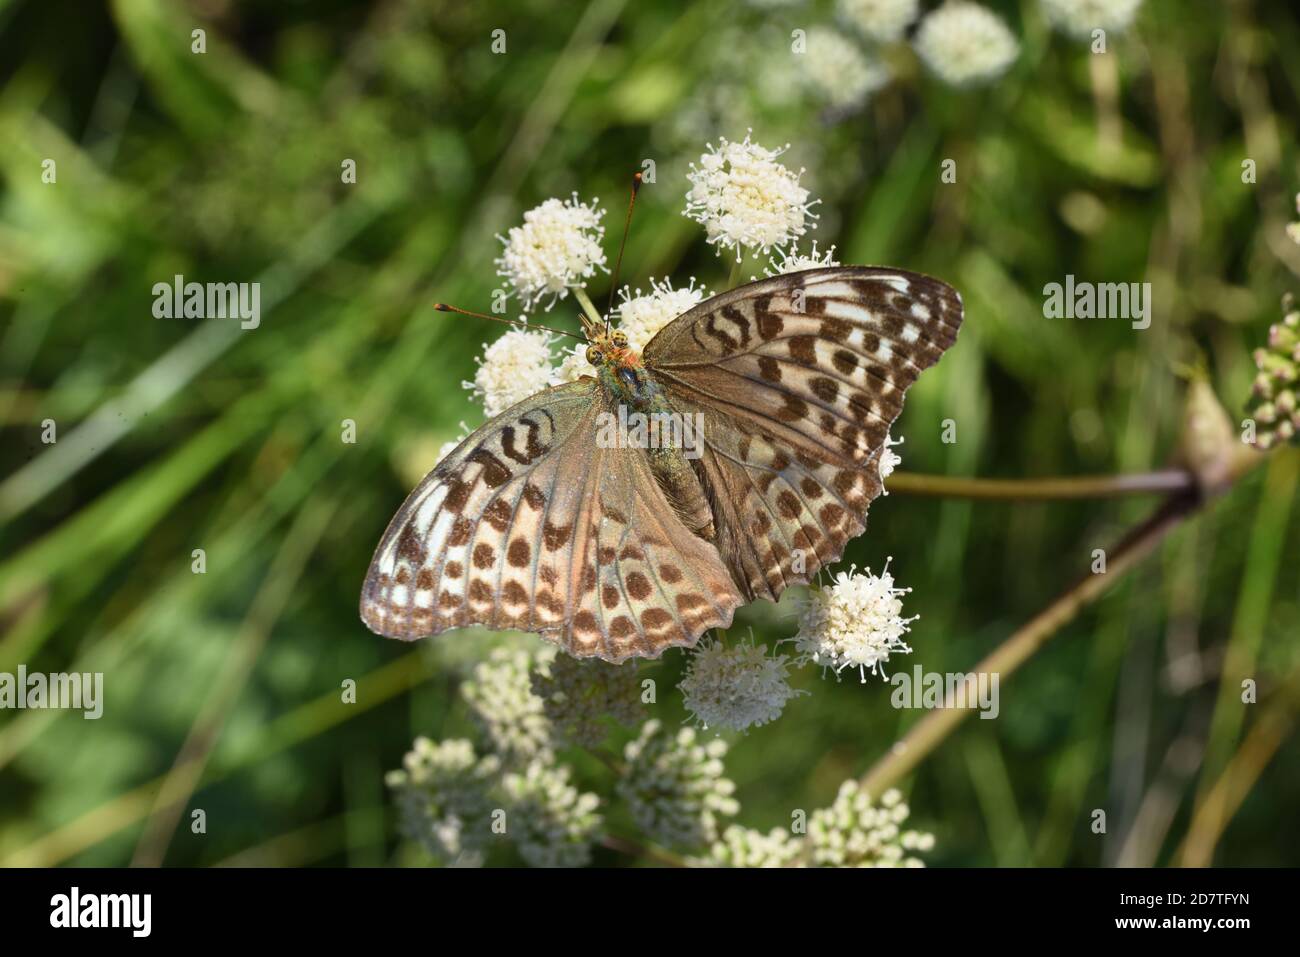 Female Silver-Washed Fritillary Butterfly, Argynnis paphia, Feeding on Common Hogweed, Heracleum sphondylium, Umbellifer Plant Stock Photo